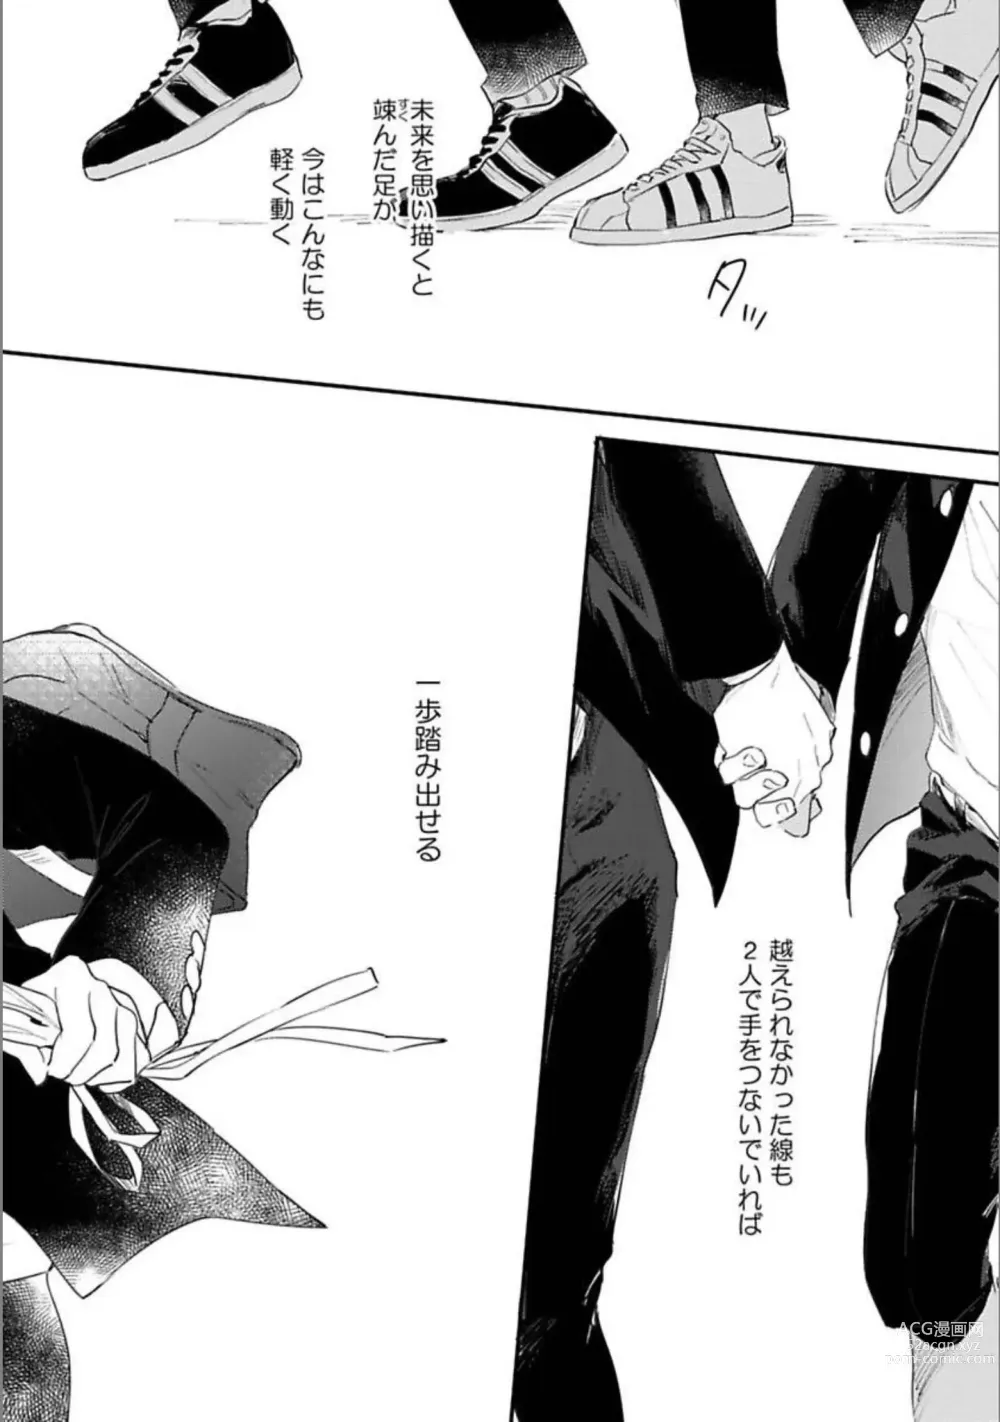 Page 189 of manga Itsuka Koi ni Naru Made Ge